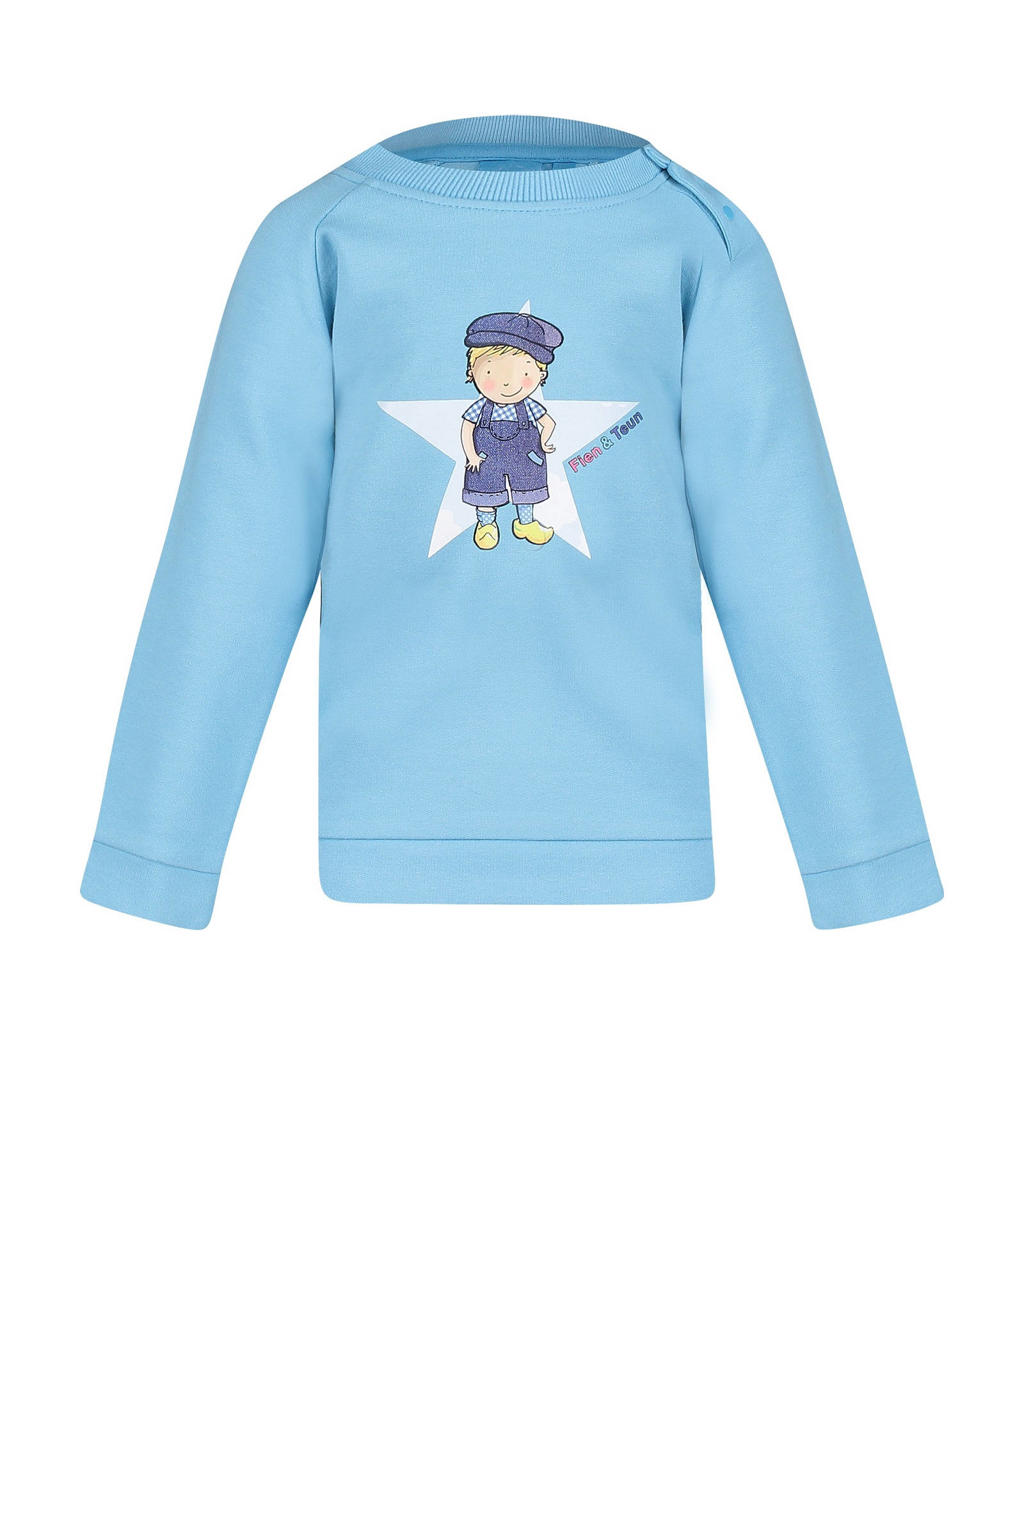 Fien & Teun sweater Mart met printopdruk lichtblauw